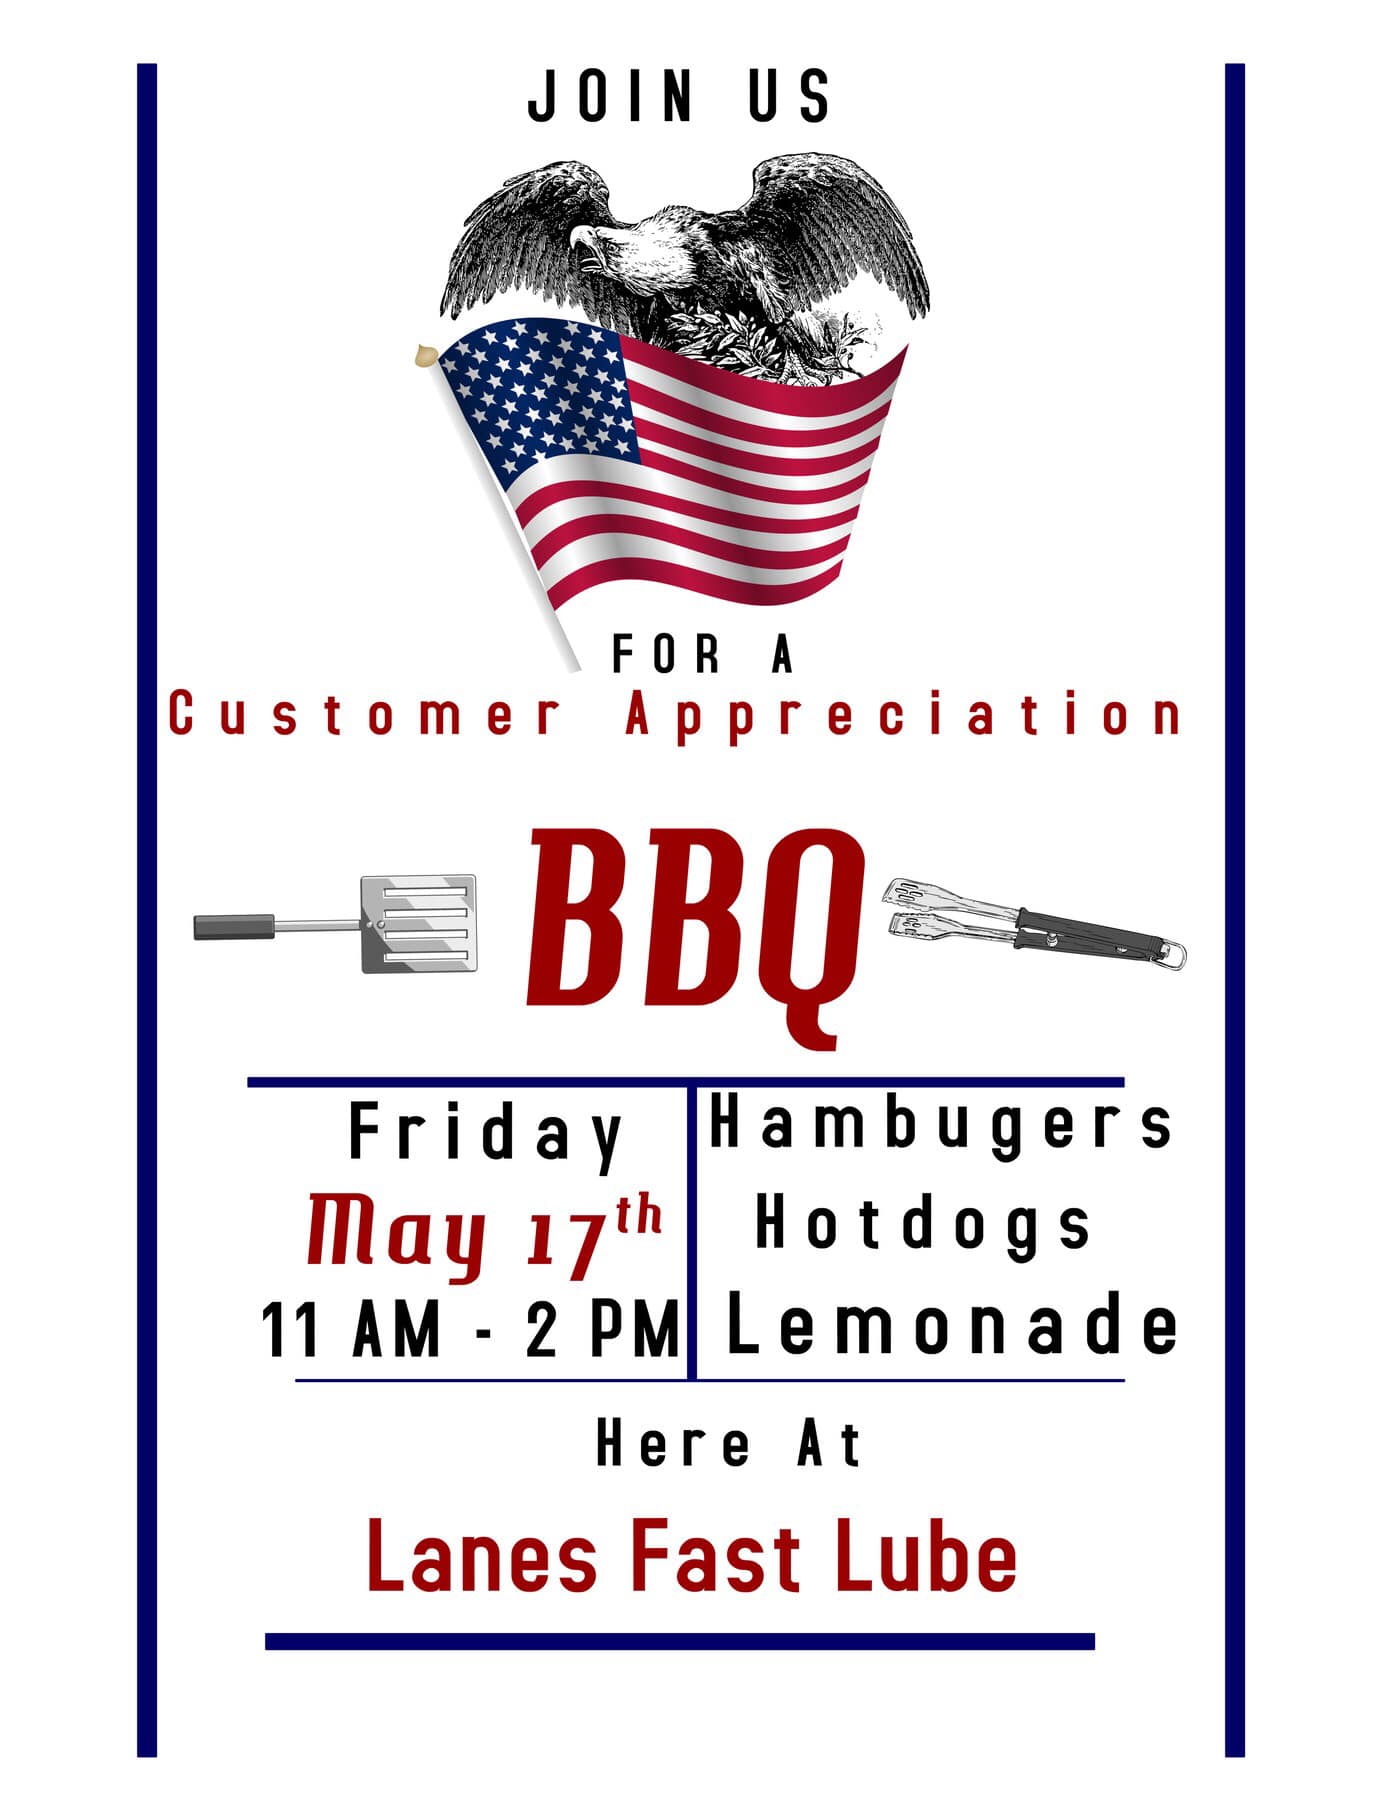 Lane's Fast Lube, Inc